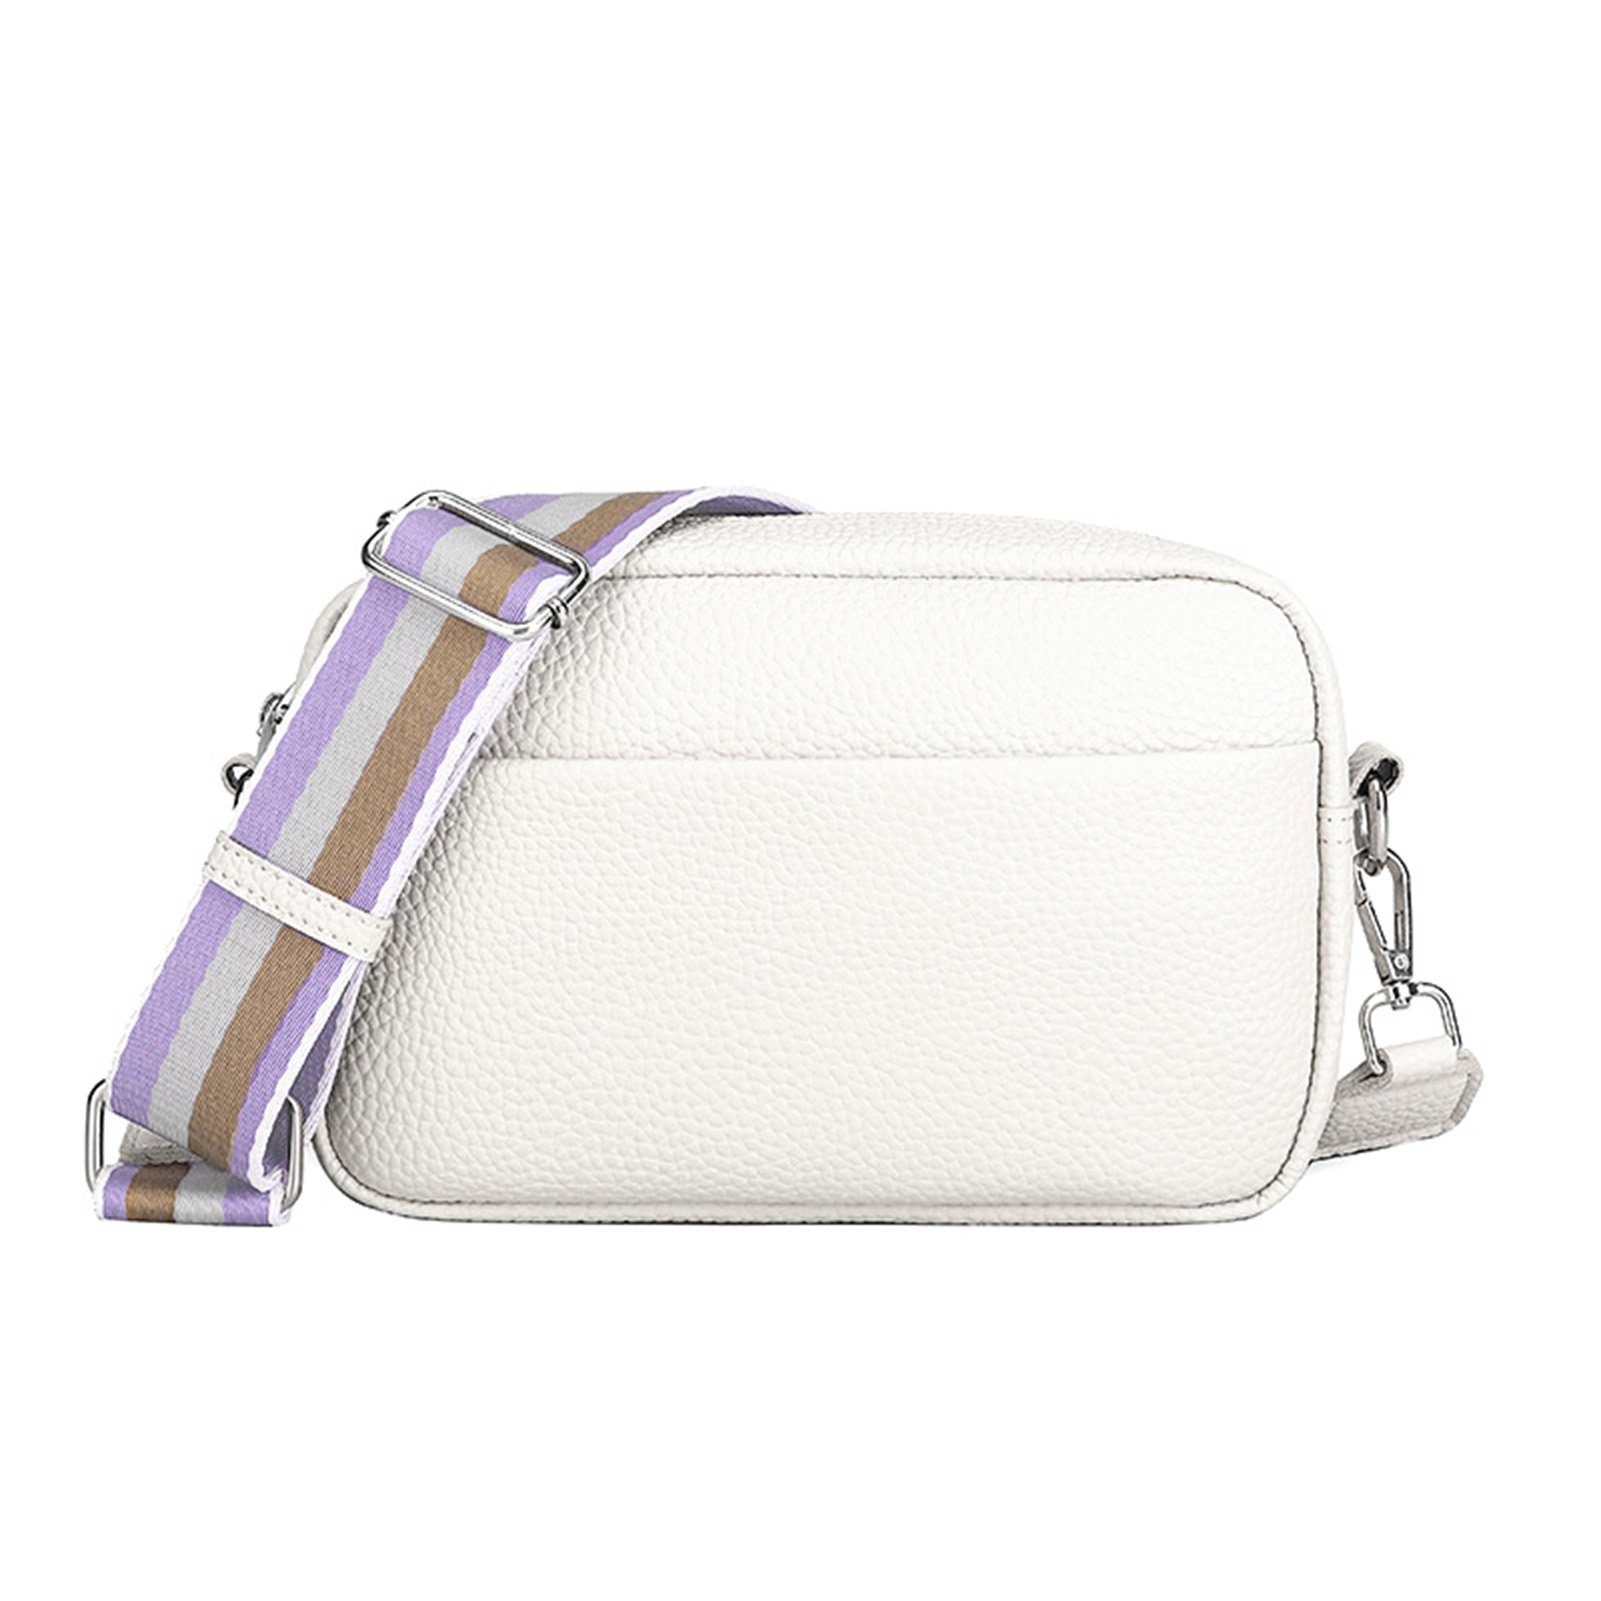 Blusmart Umhängetasche Damen-Umhängetasche Aus PU-Leder, Tragbar Handtasche, Crossbody Bag white